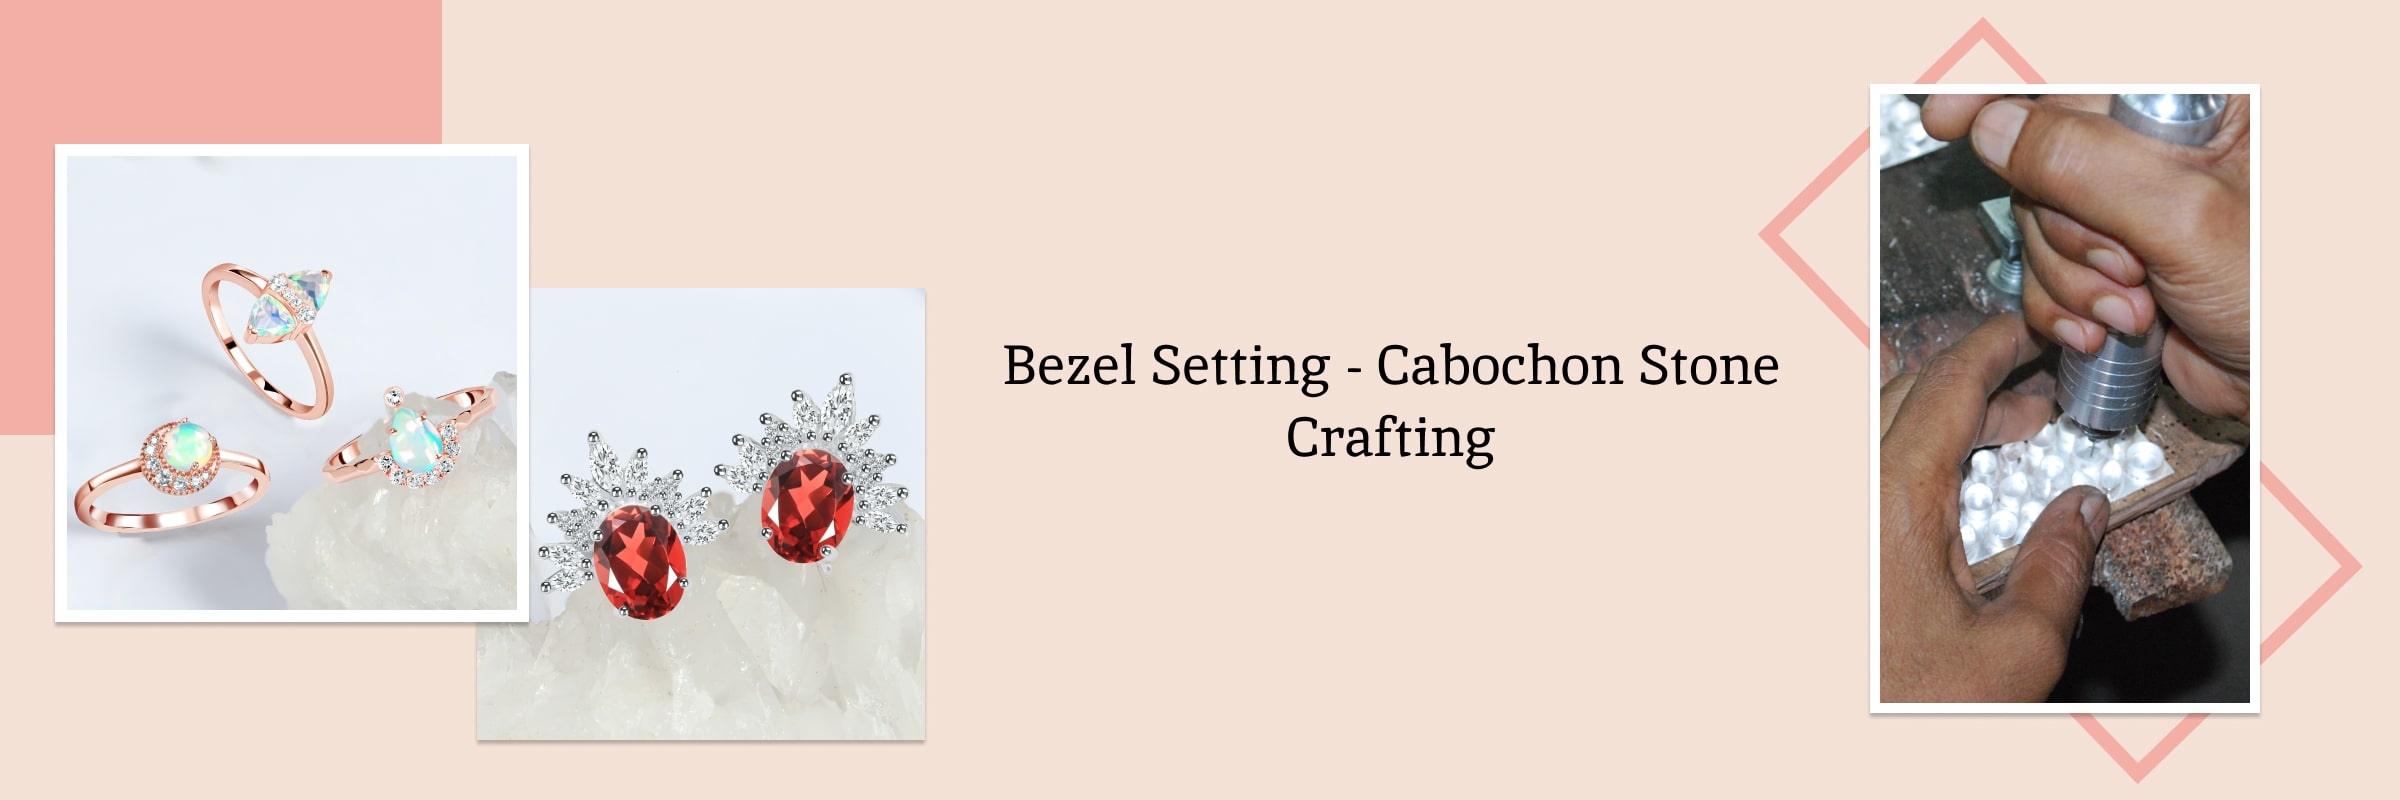 How to Bezel Set a Cabochon Stone